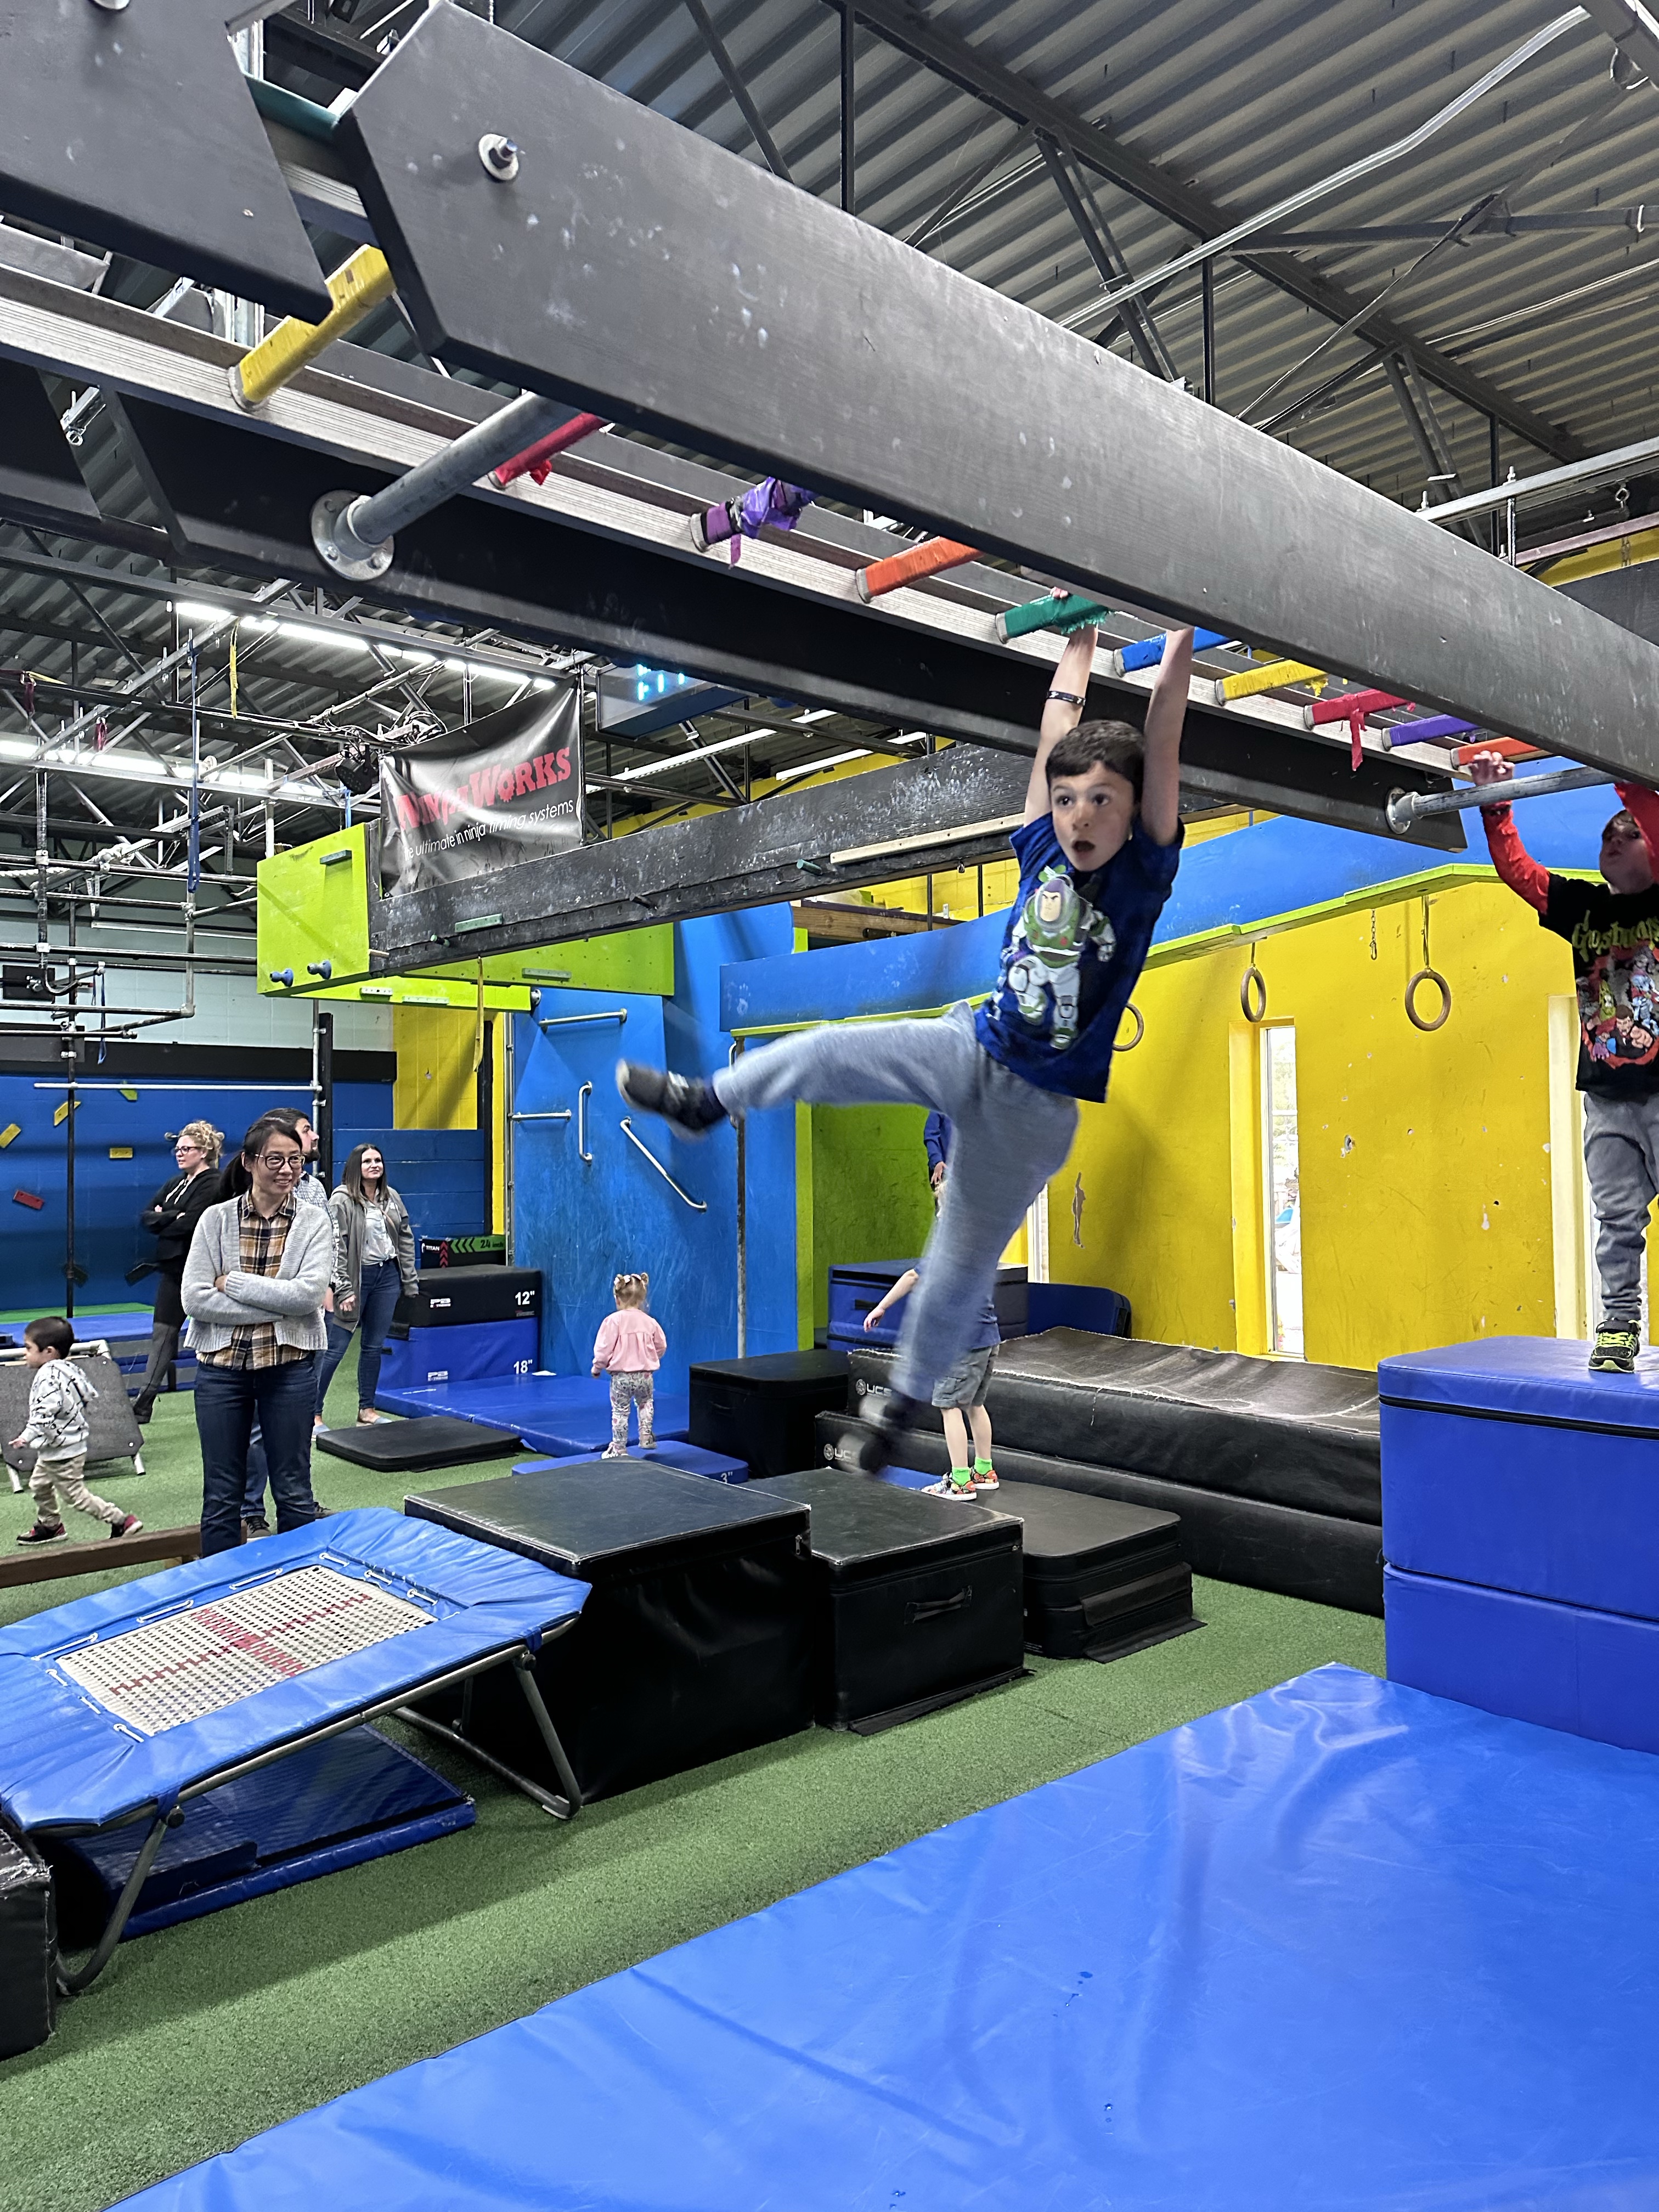 Laid Back Fitness Ninja Gym in Warwick, Rhode Island with kids